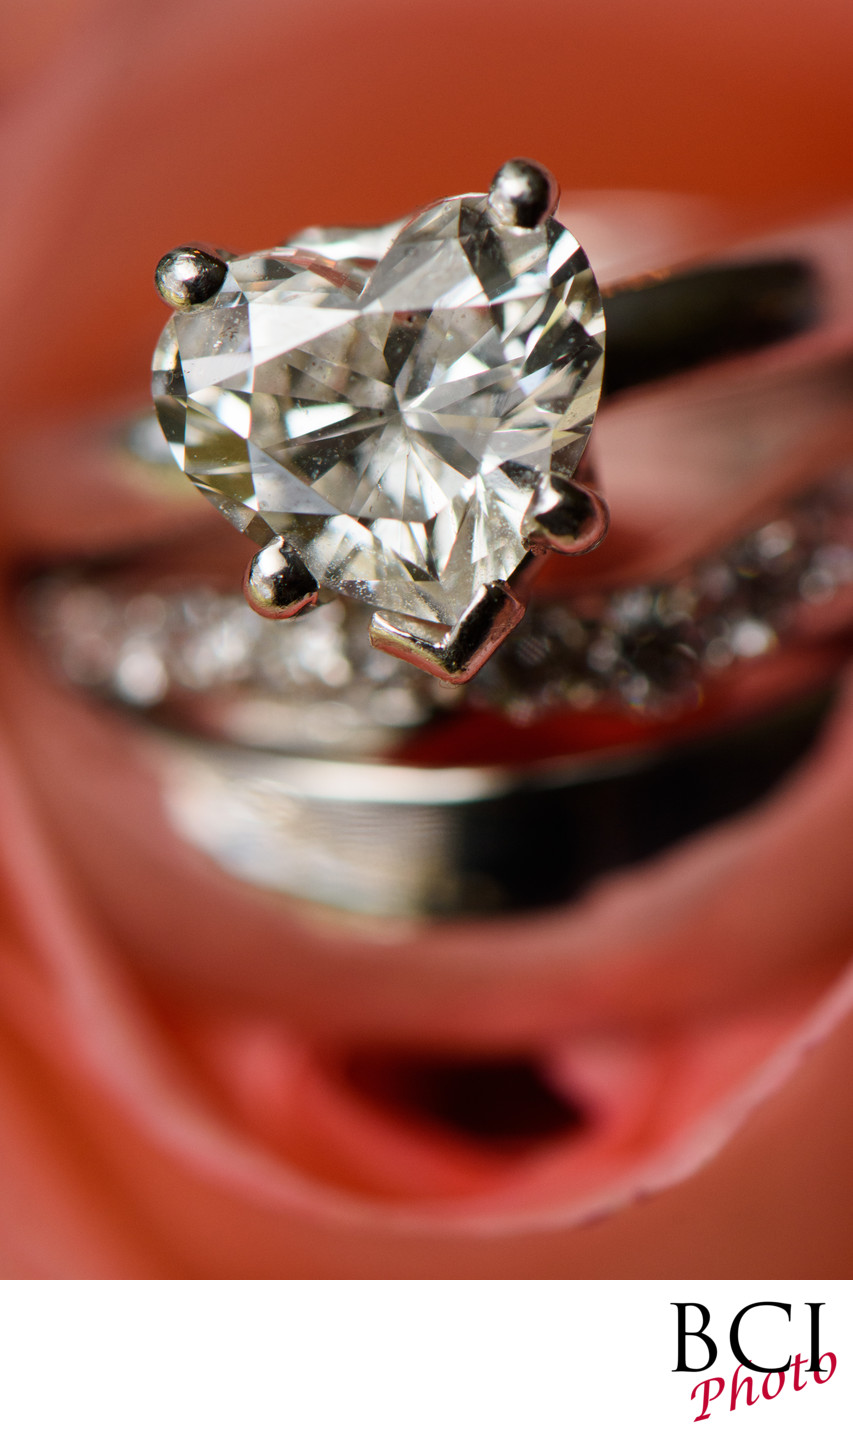 Wedding Ring Closeup with Heart Shaped Diamond Ring